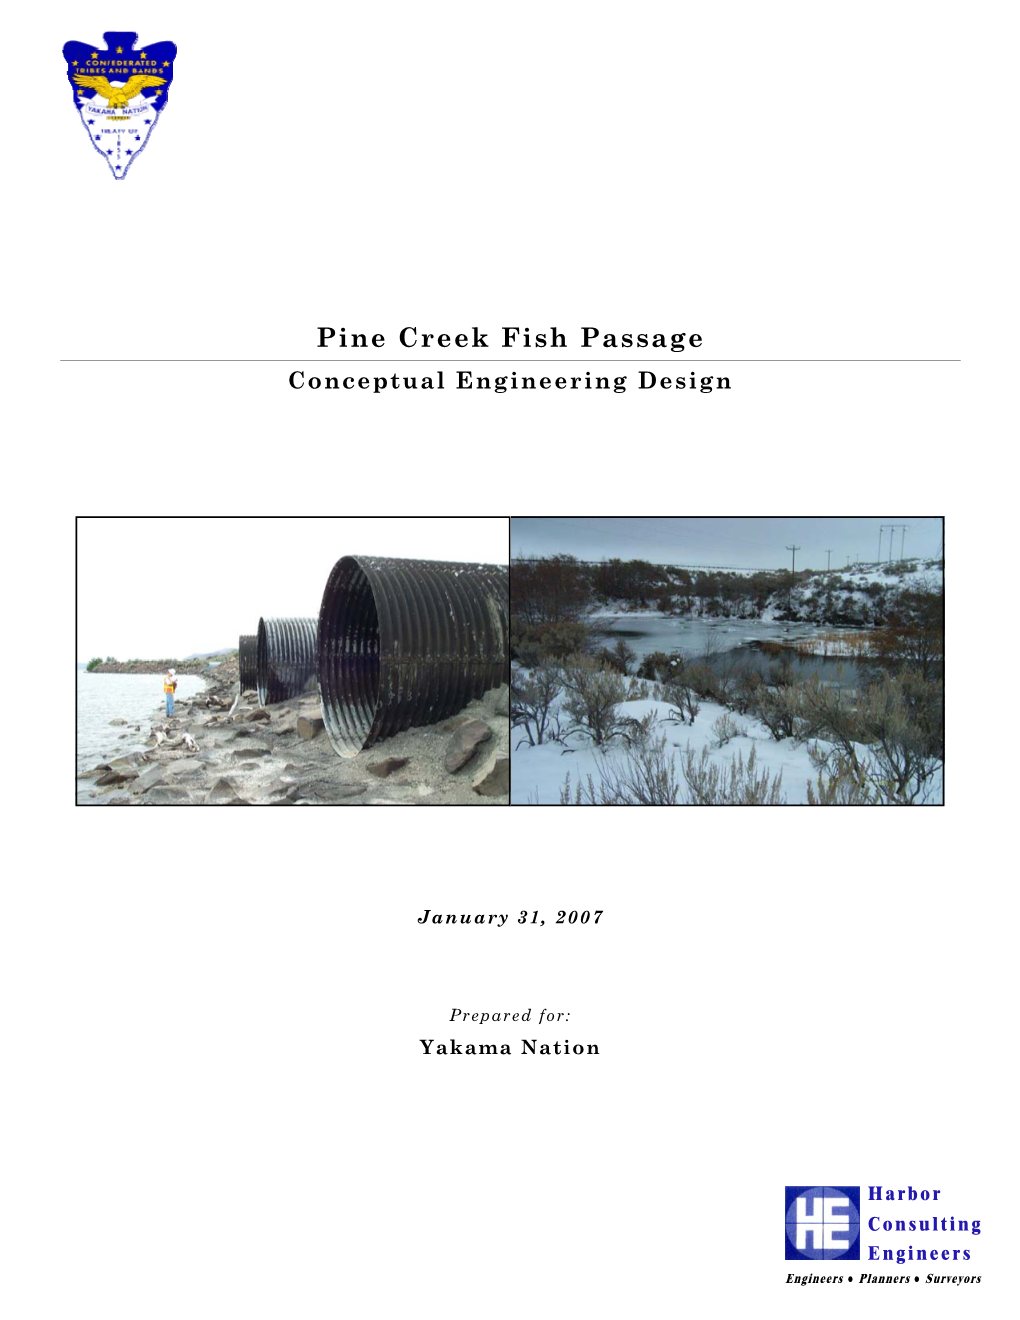 Pine Creek Fish Passage Conceptual Engineering Design